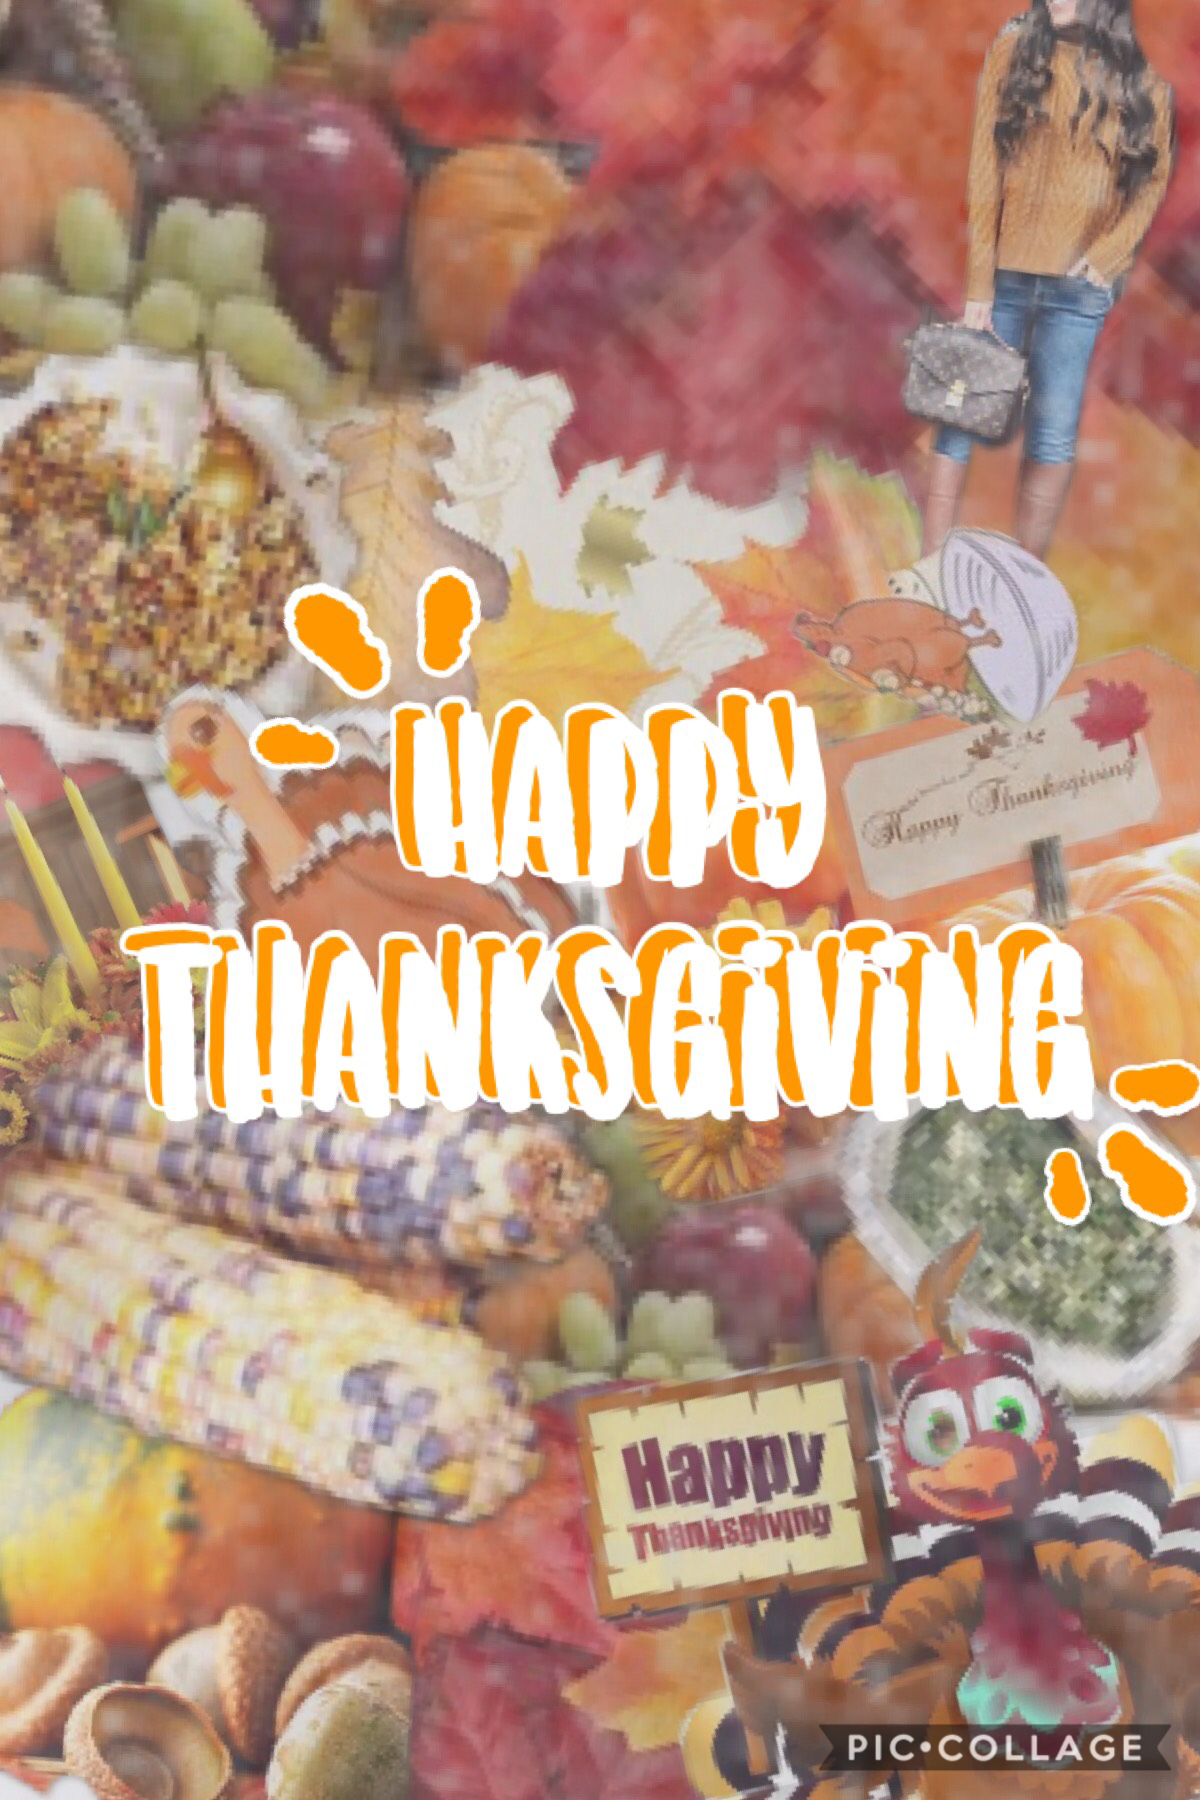 Happy thanksgiving!!!🦃🍁🍽 